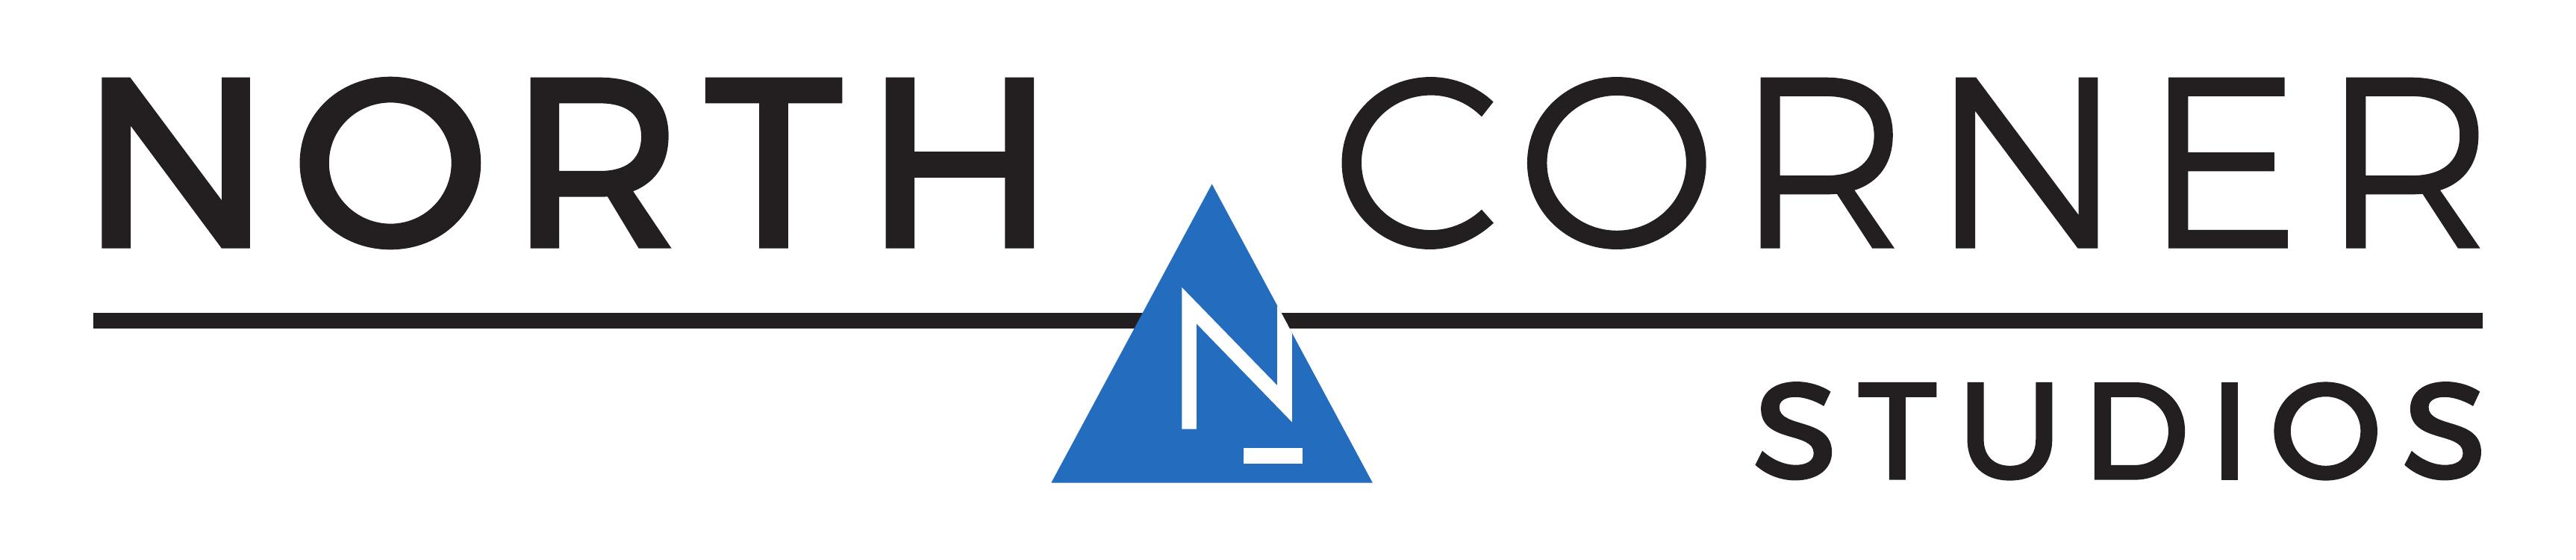 North Corner Studios logo